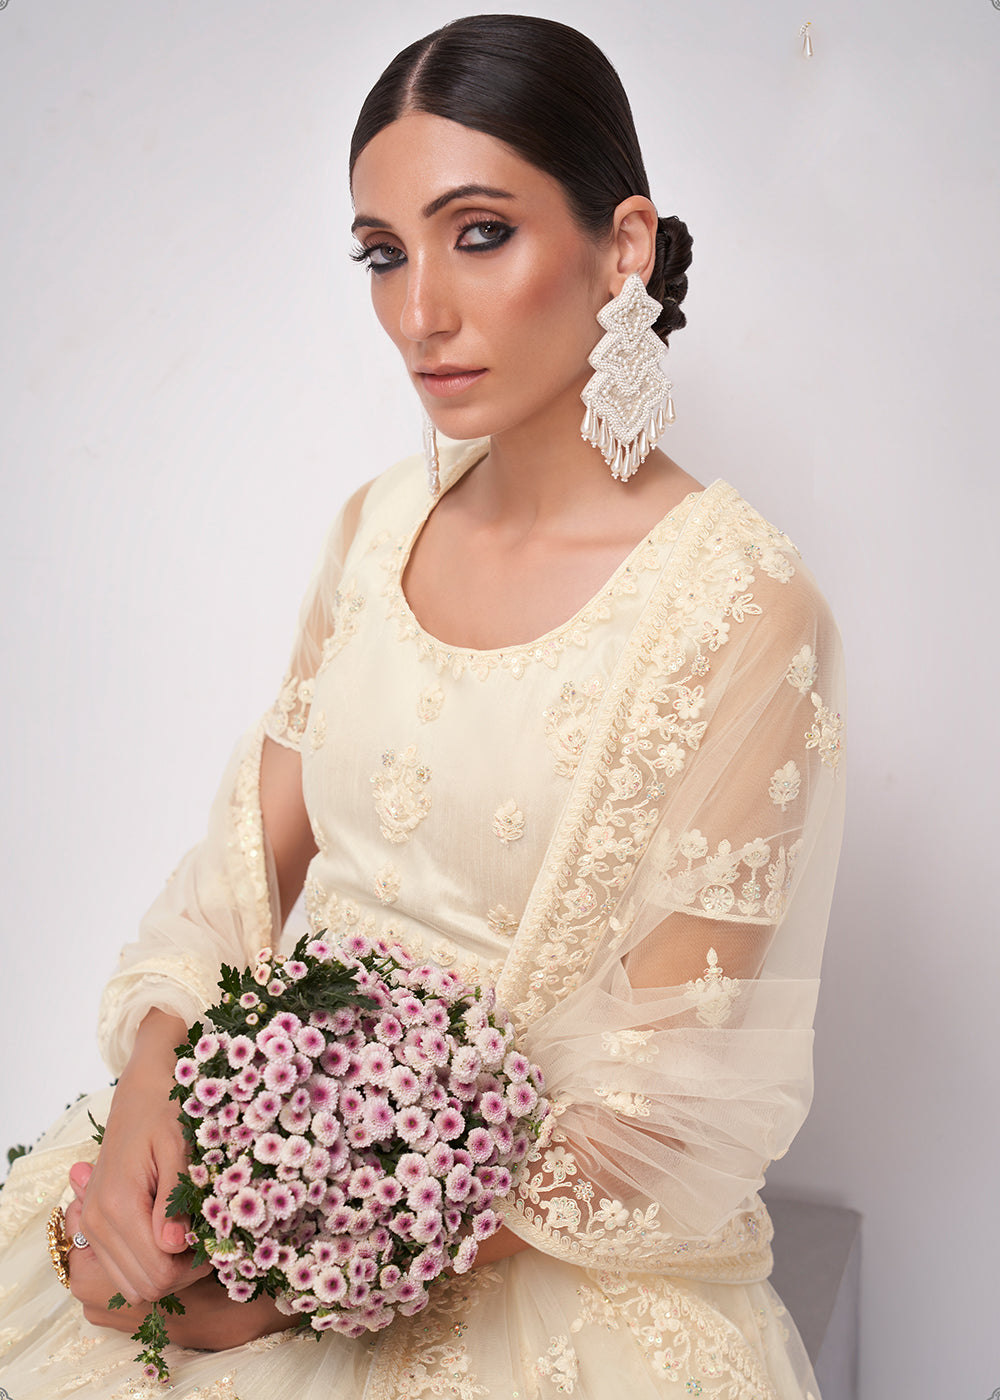 Buy Now Classic Off White Cording Designer Wedding Bridal Lehenga Choli Online in Canada, UK, USA & Worldwide at Empress Clothing.